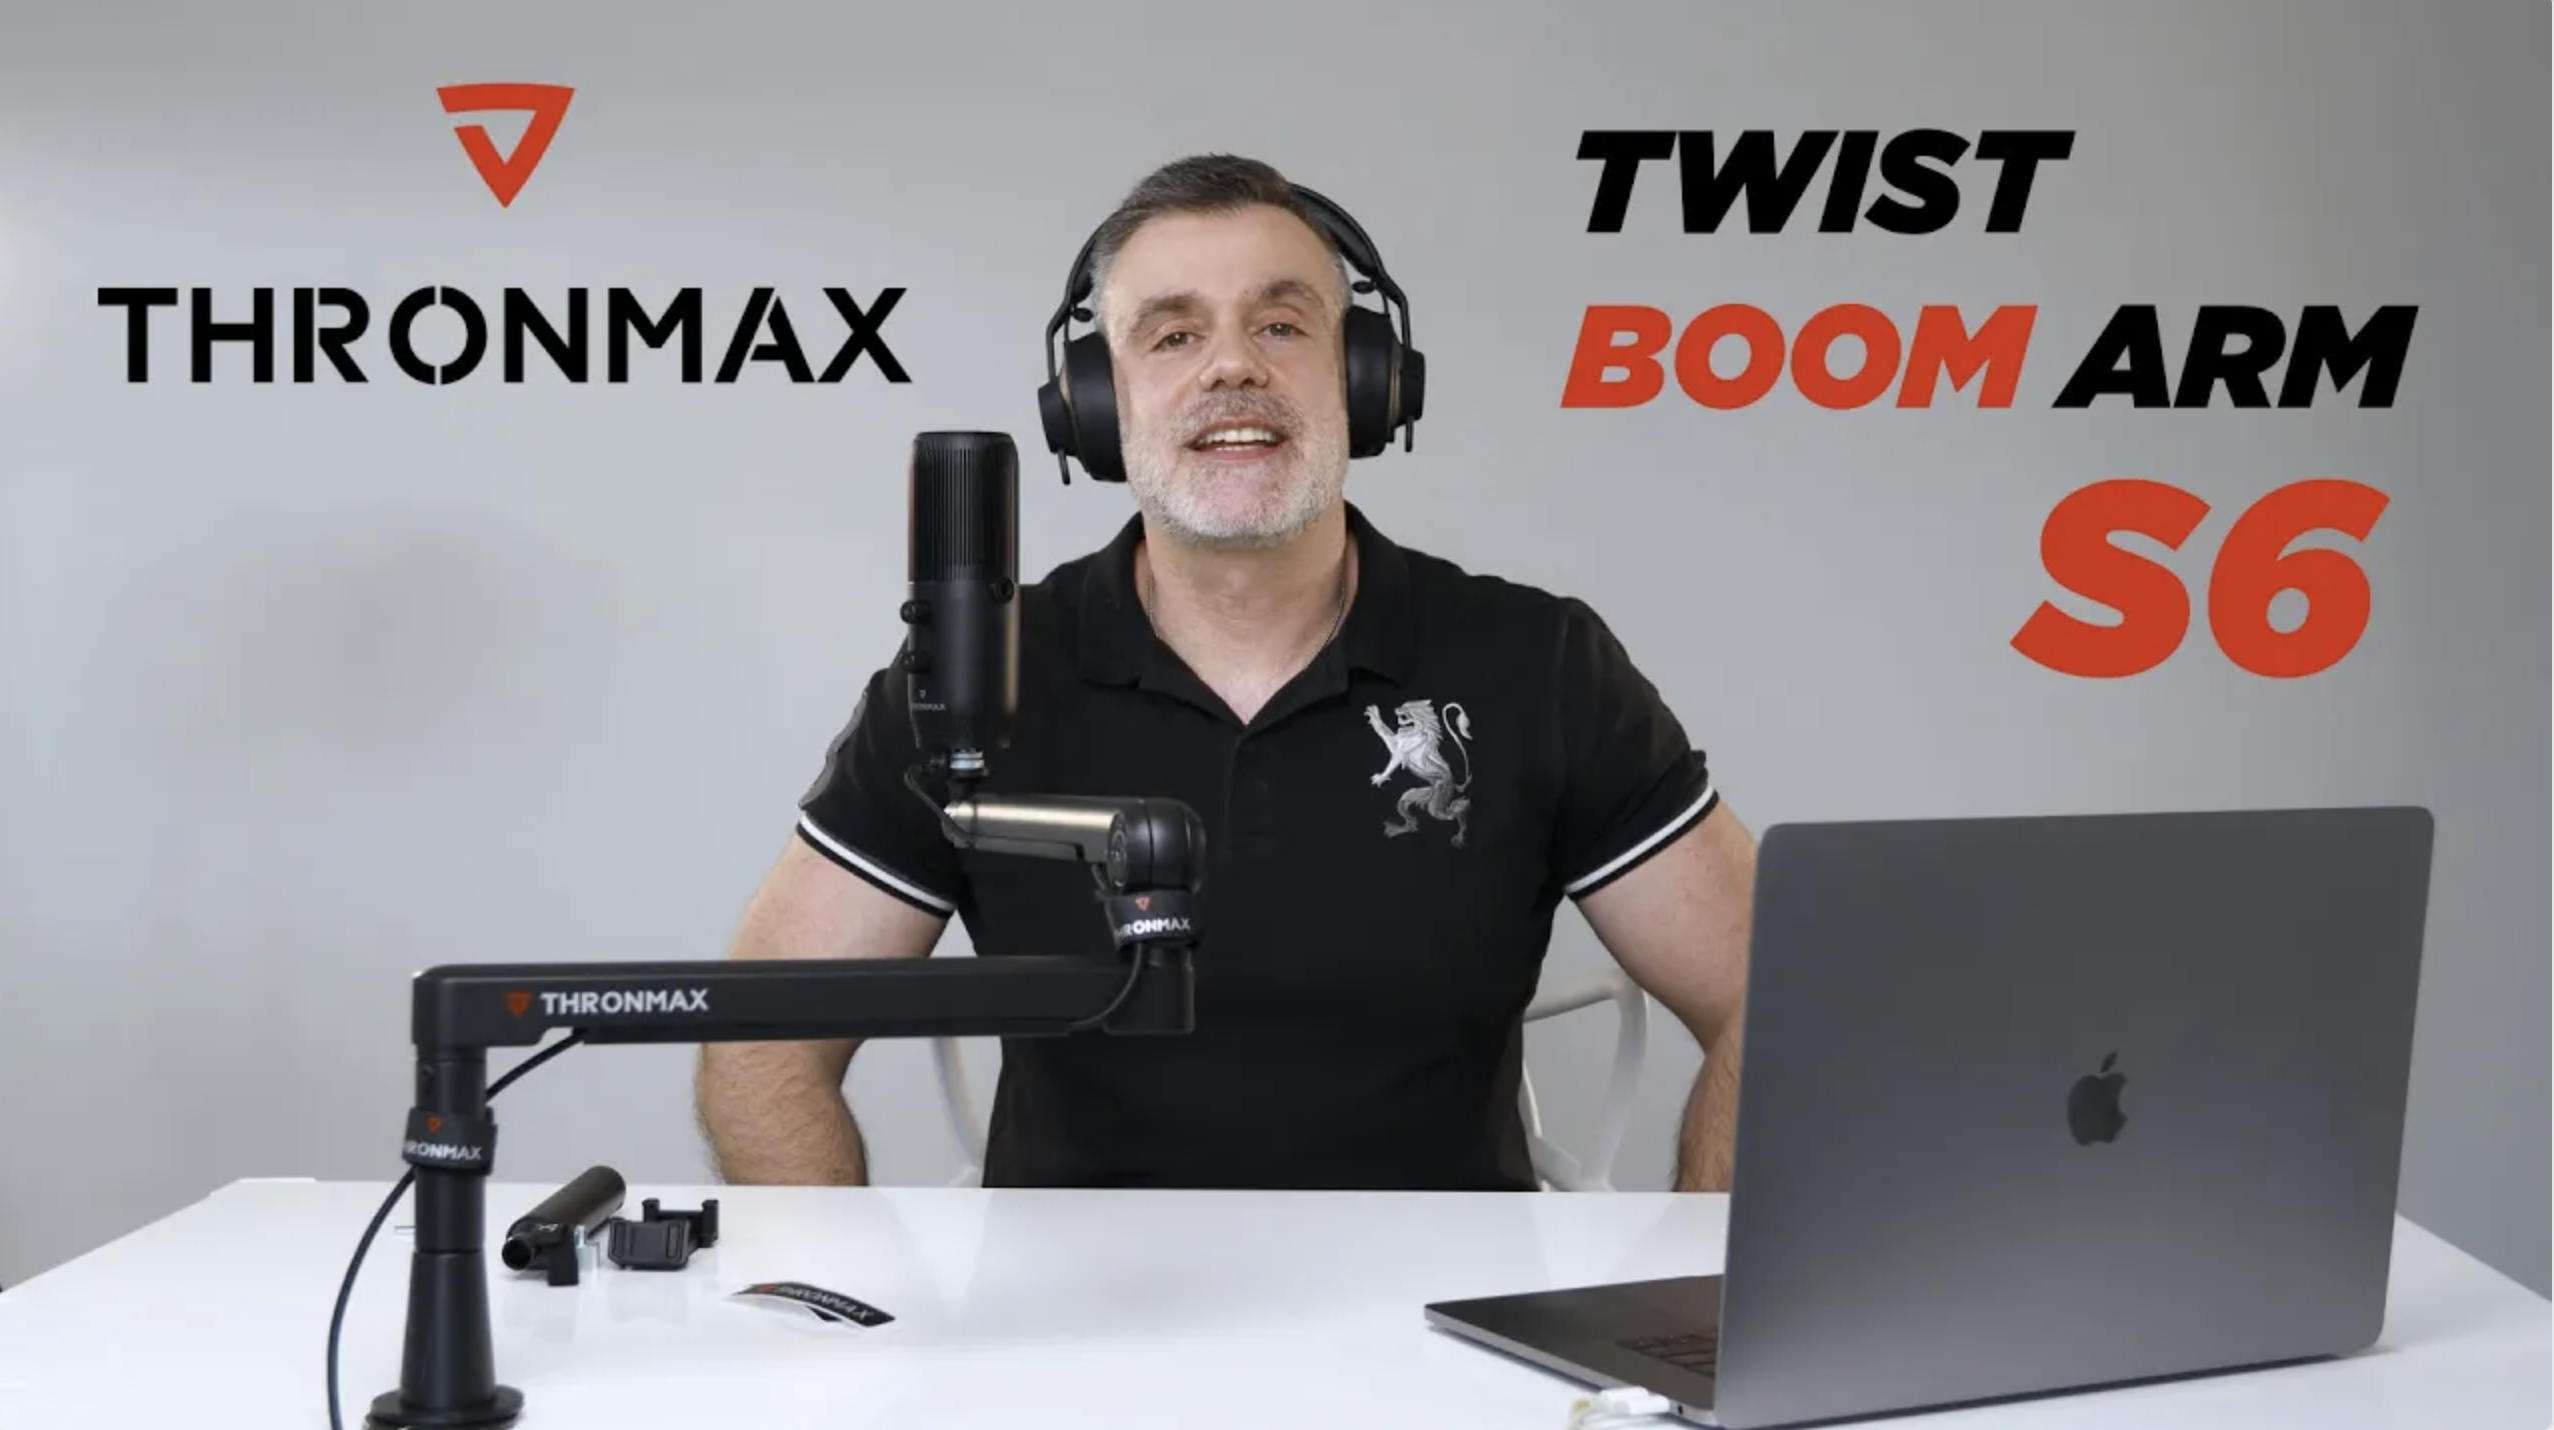 Thronmax Boom arm